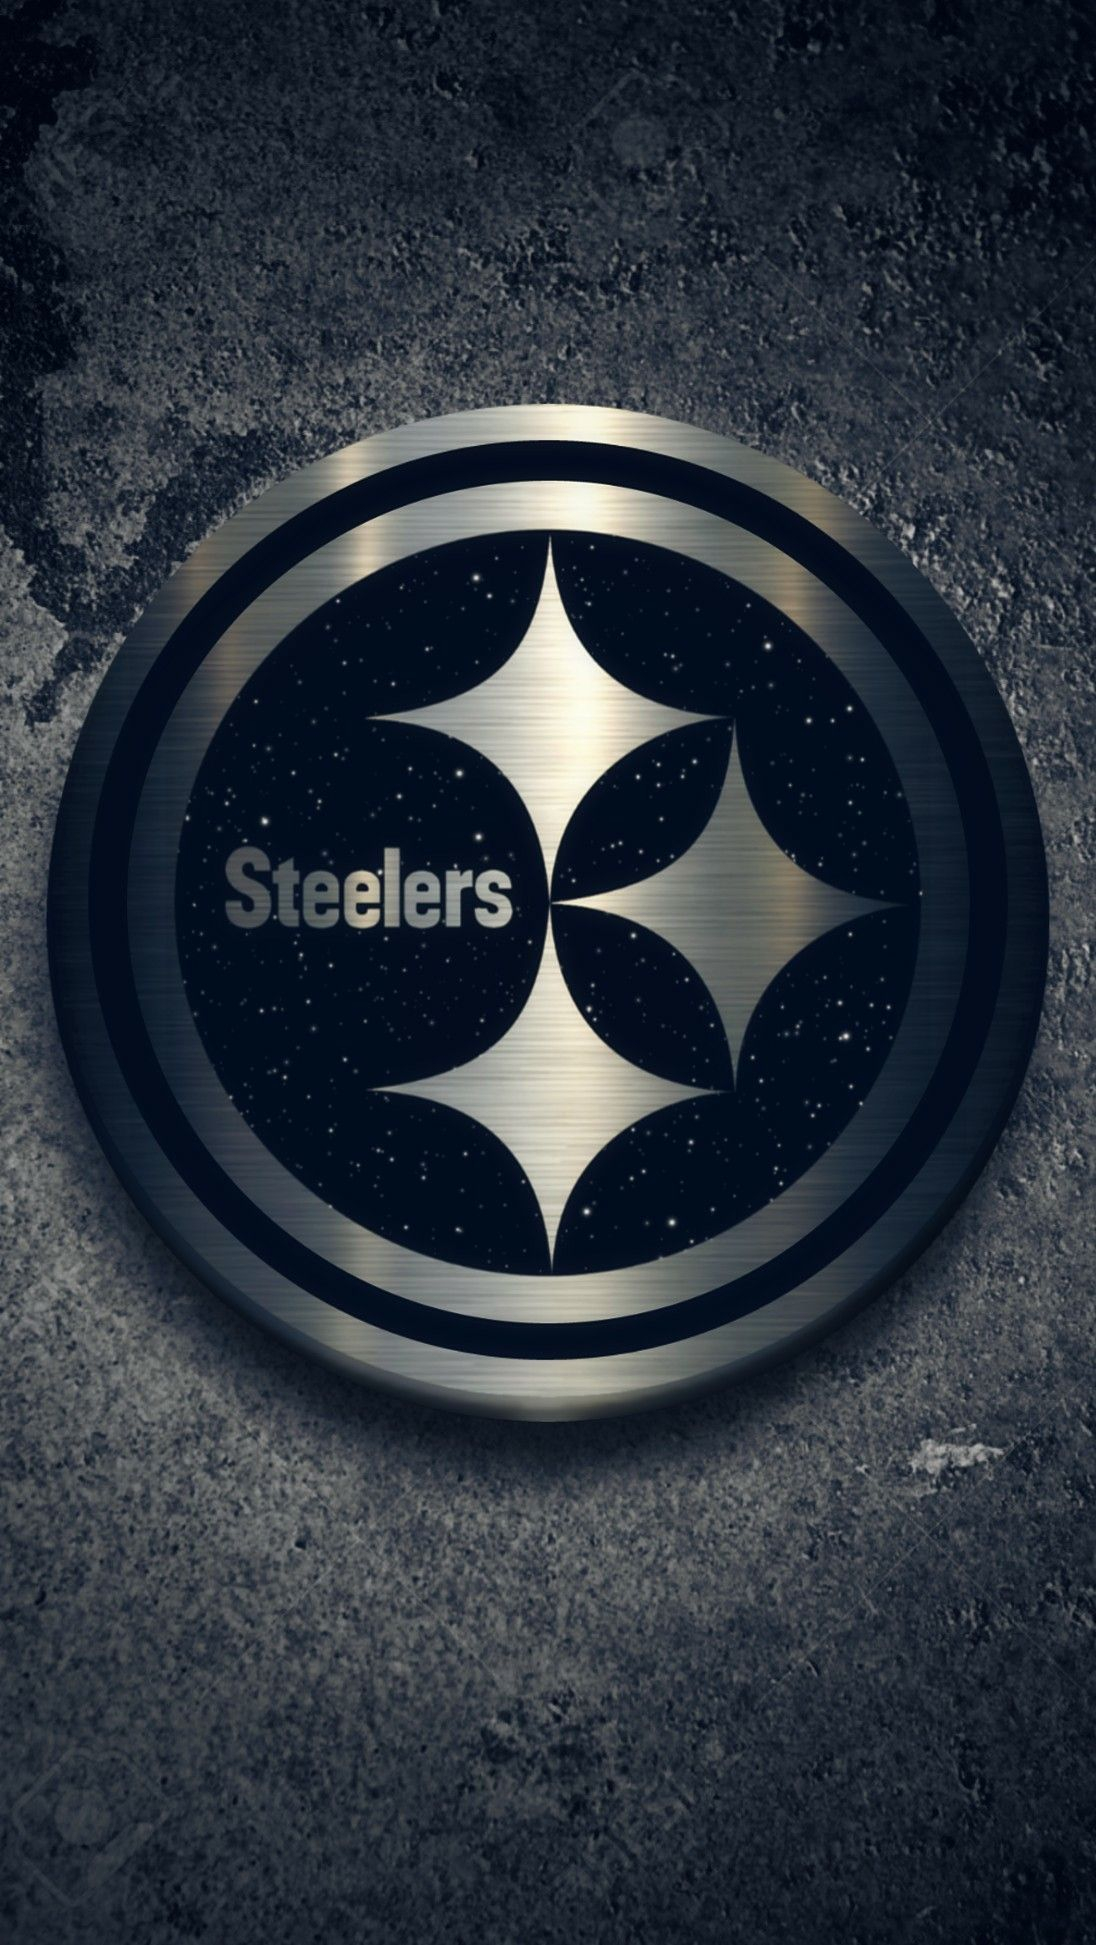 1096x1945 Pittsburgh Steelers Logo Wallpaper | Pittsburgh steelers logo, Pittsburgh steelers wallpaper, Pittsburgh steelers